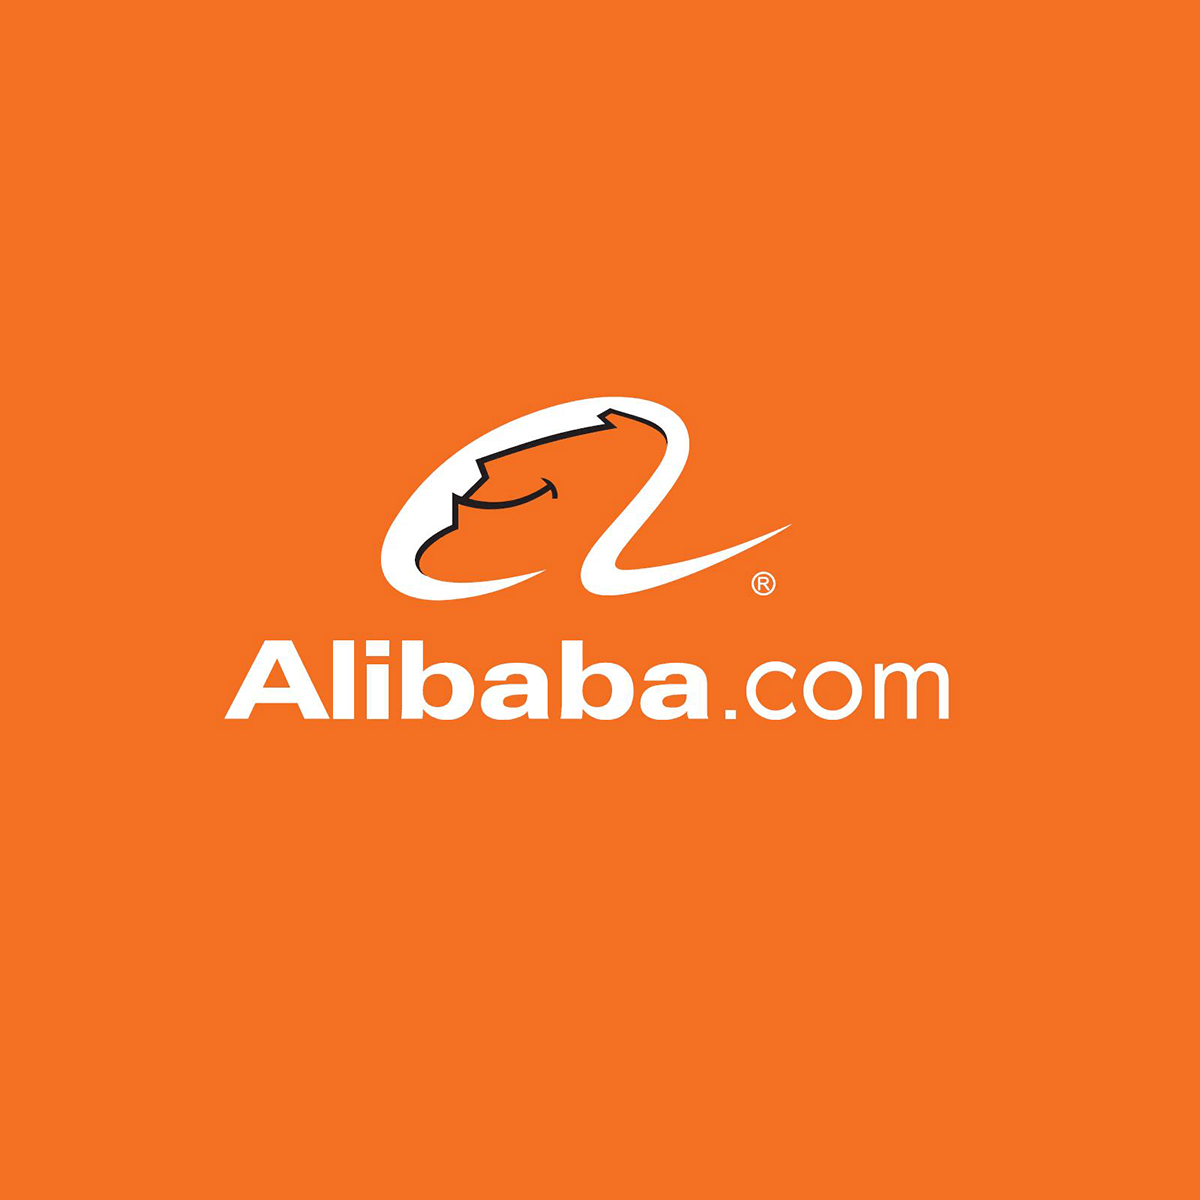 Alibaba Slot Machine Sale Offers